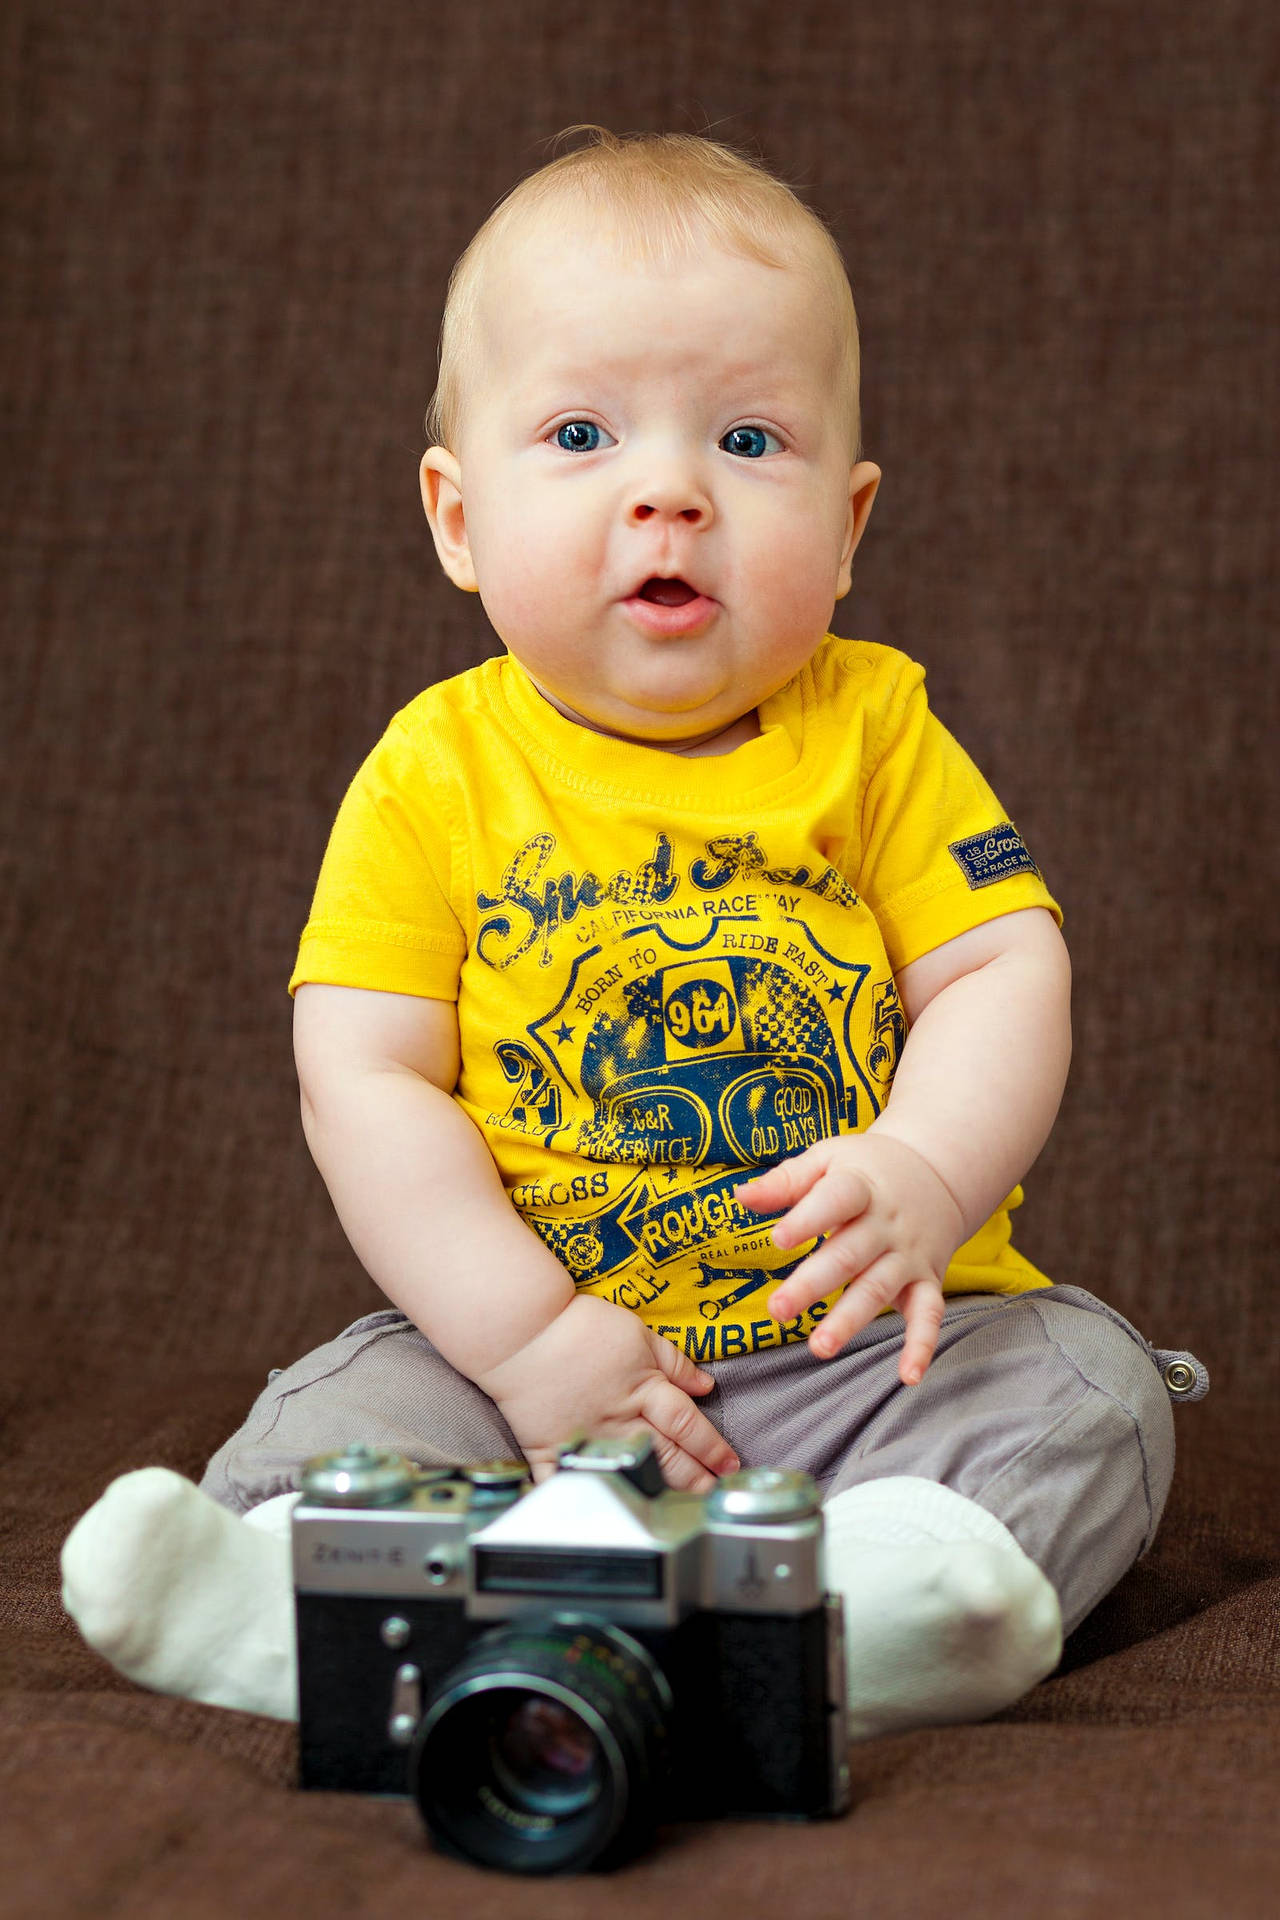 Baby Boy Wearing Yellow Shirt Background